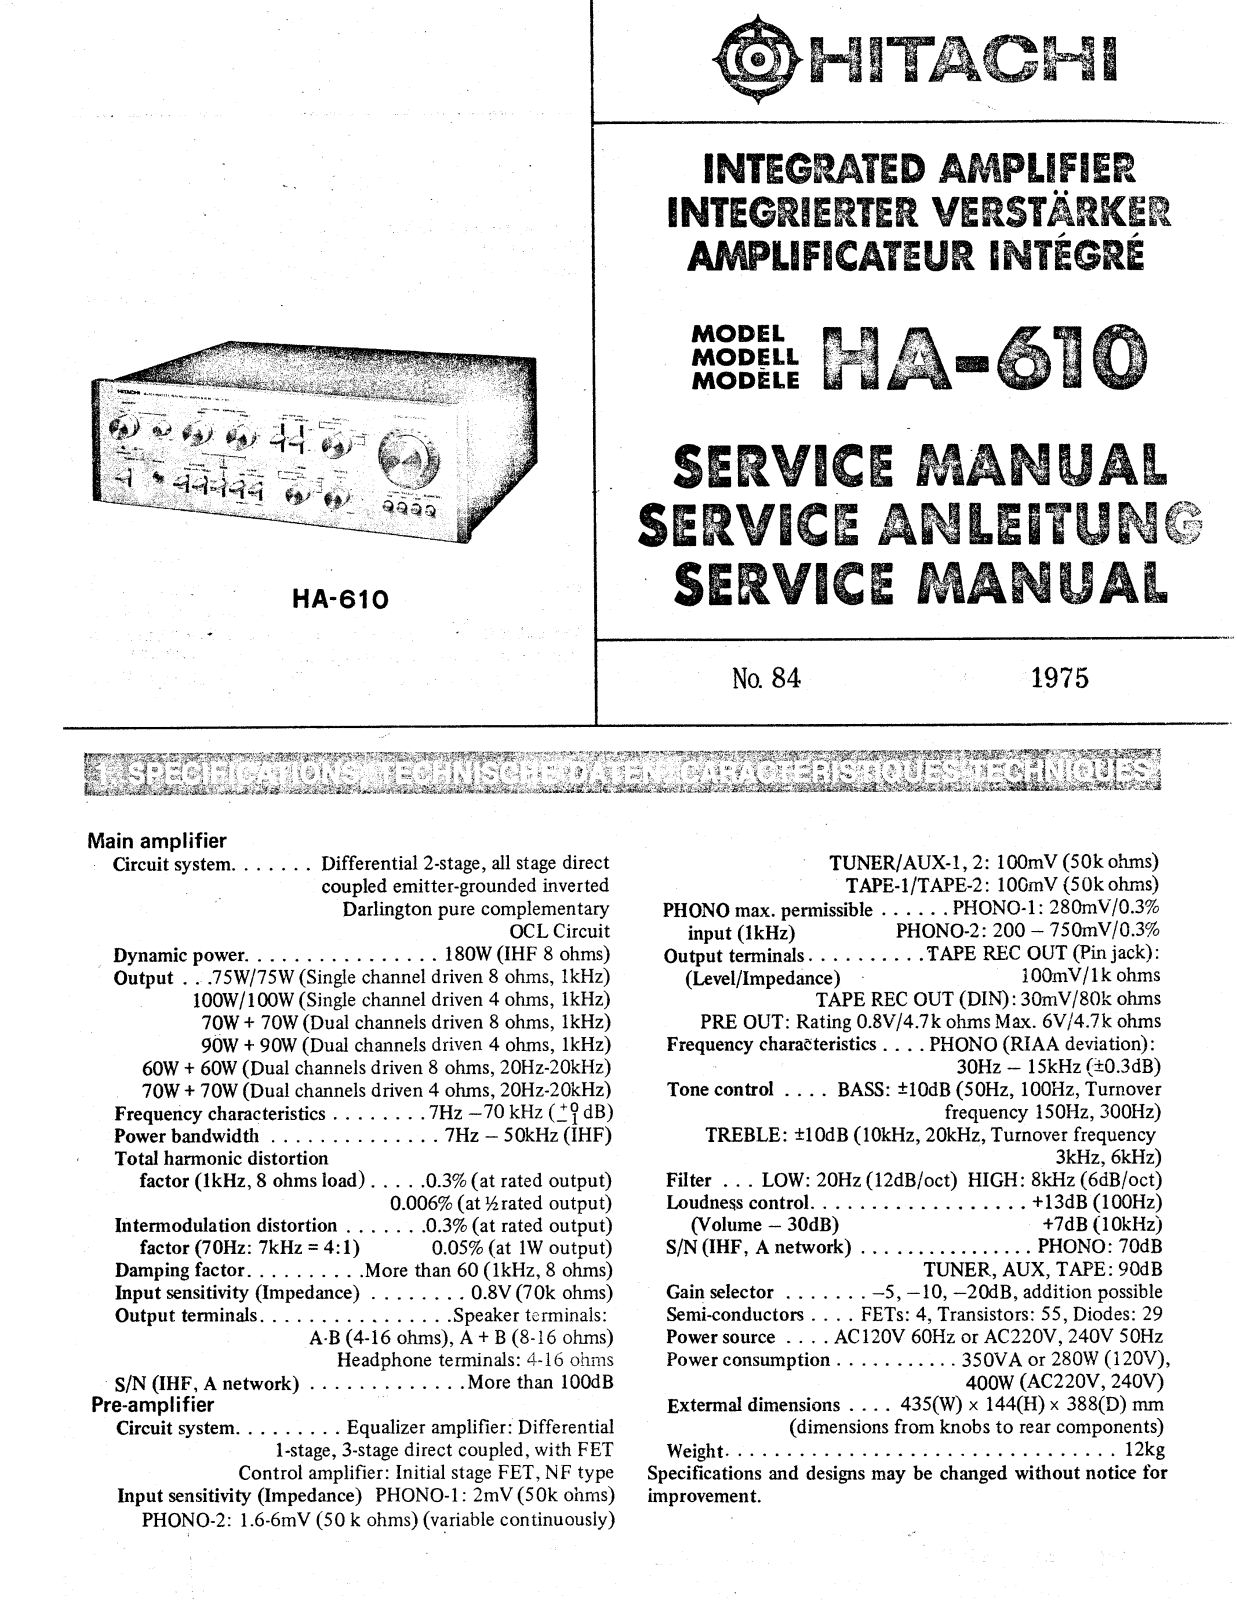 Hitachi HA-610 Service manual